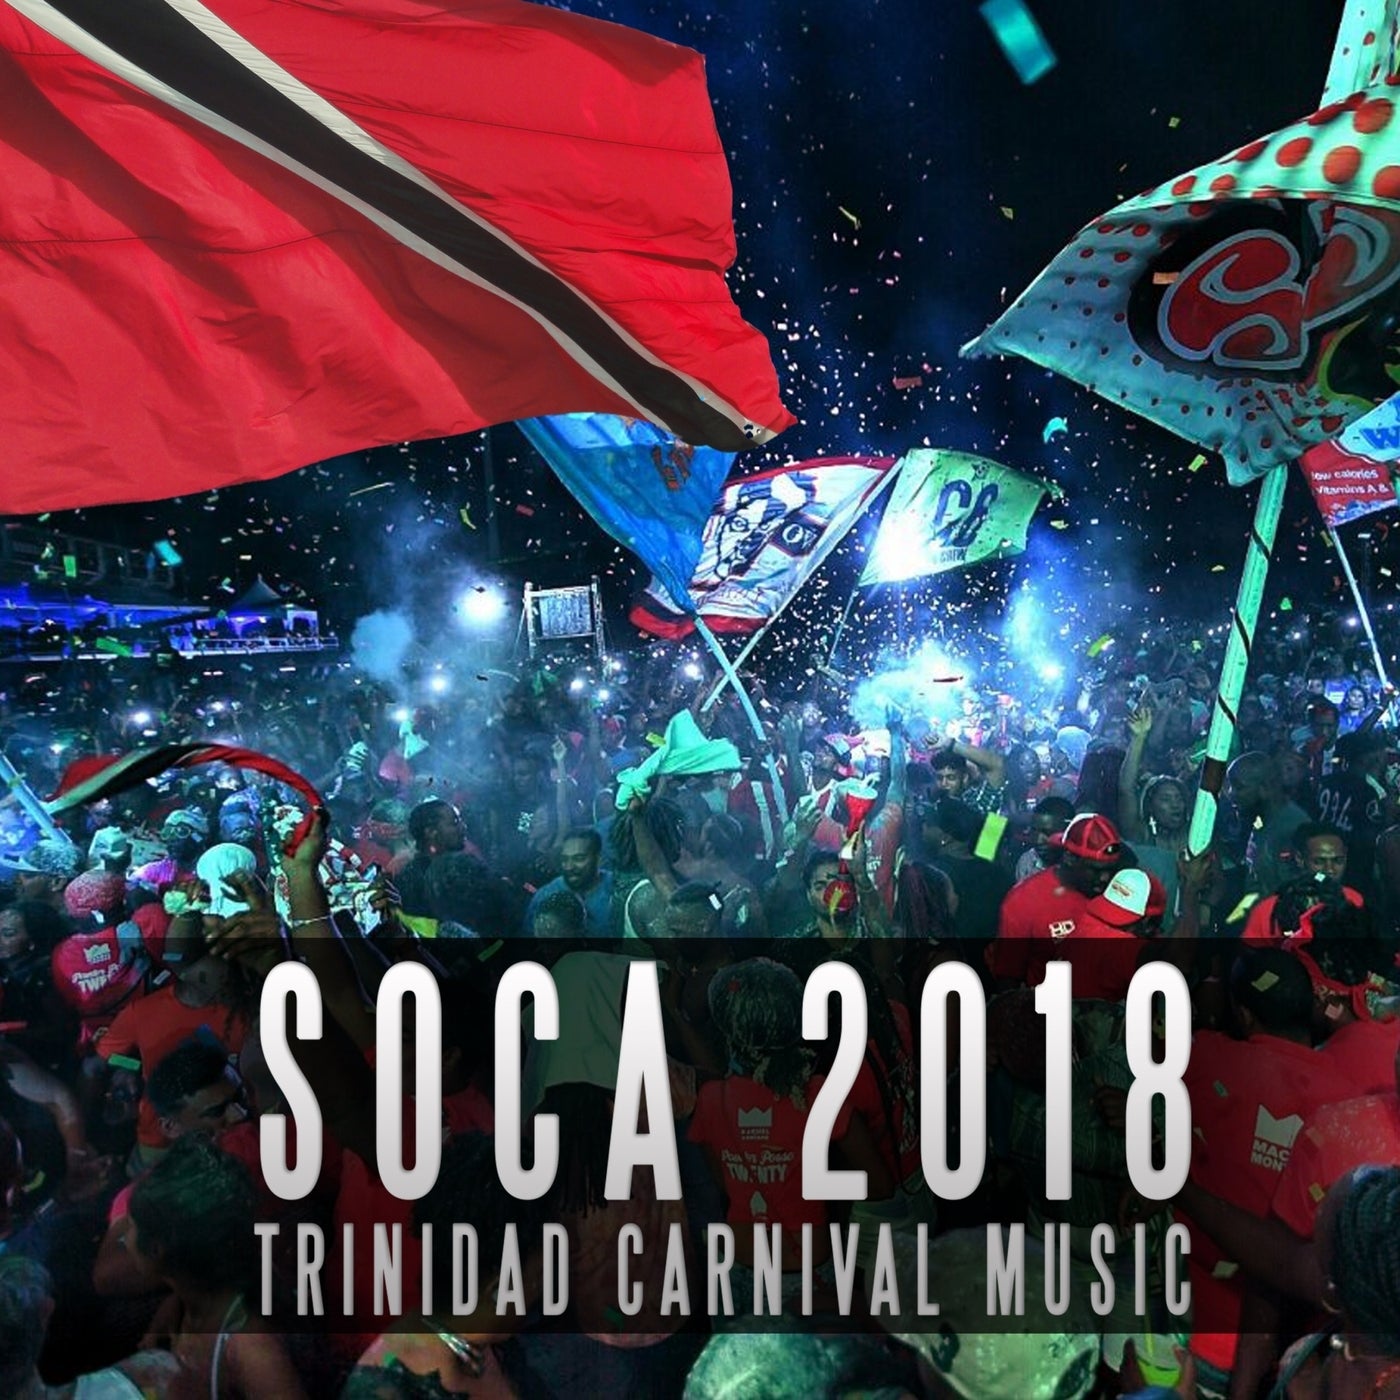 Soca 2018 Trinidad Carnival Music by Machel Montano, Lil Natty, Thunda